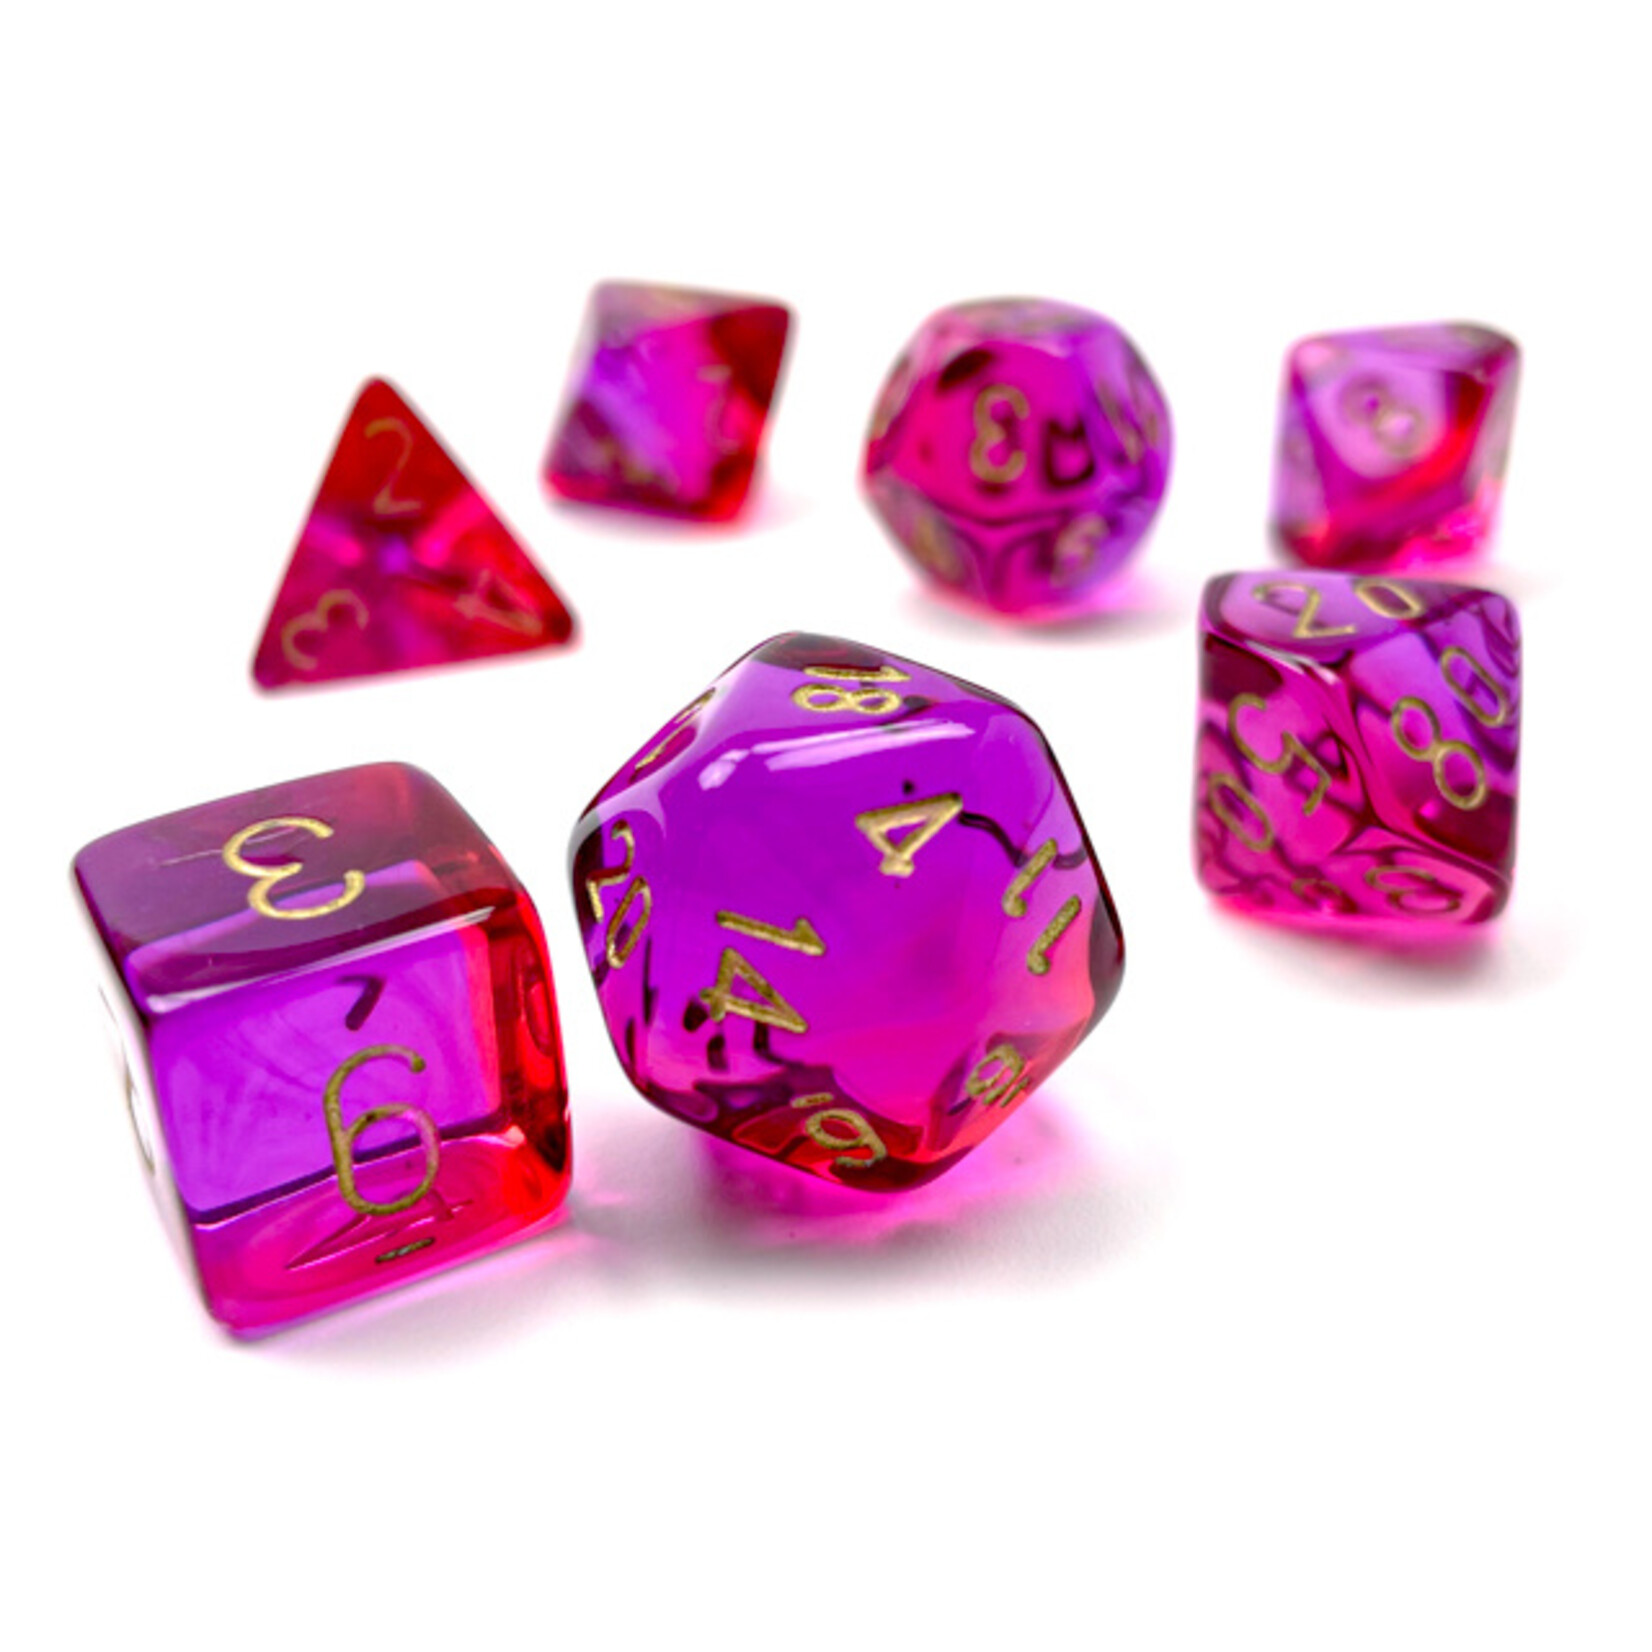 Chessex Chessex 7-Die set Gemini Translucent - Red-Violet/Gold